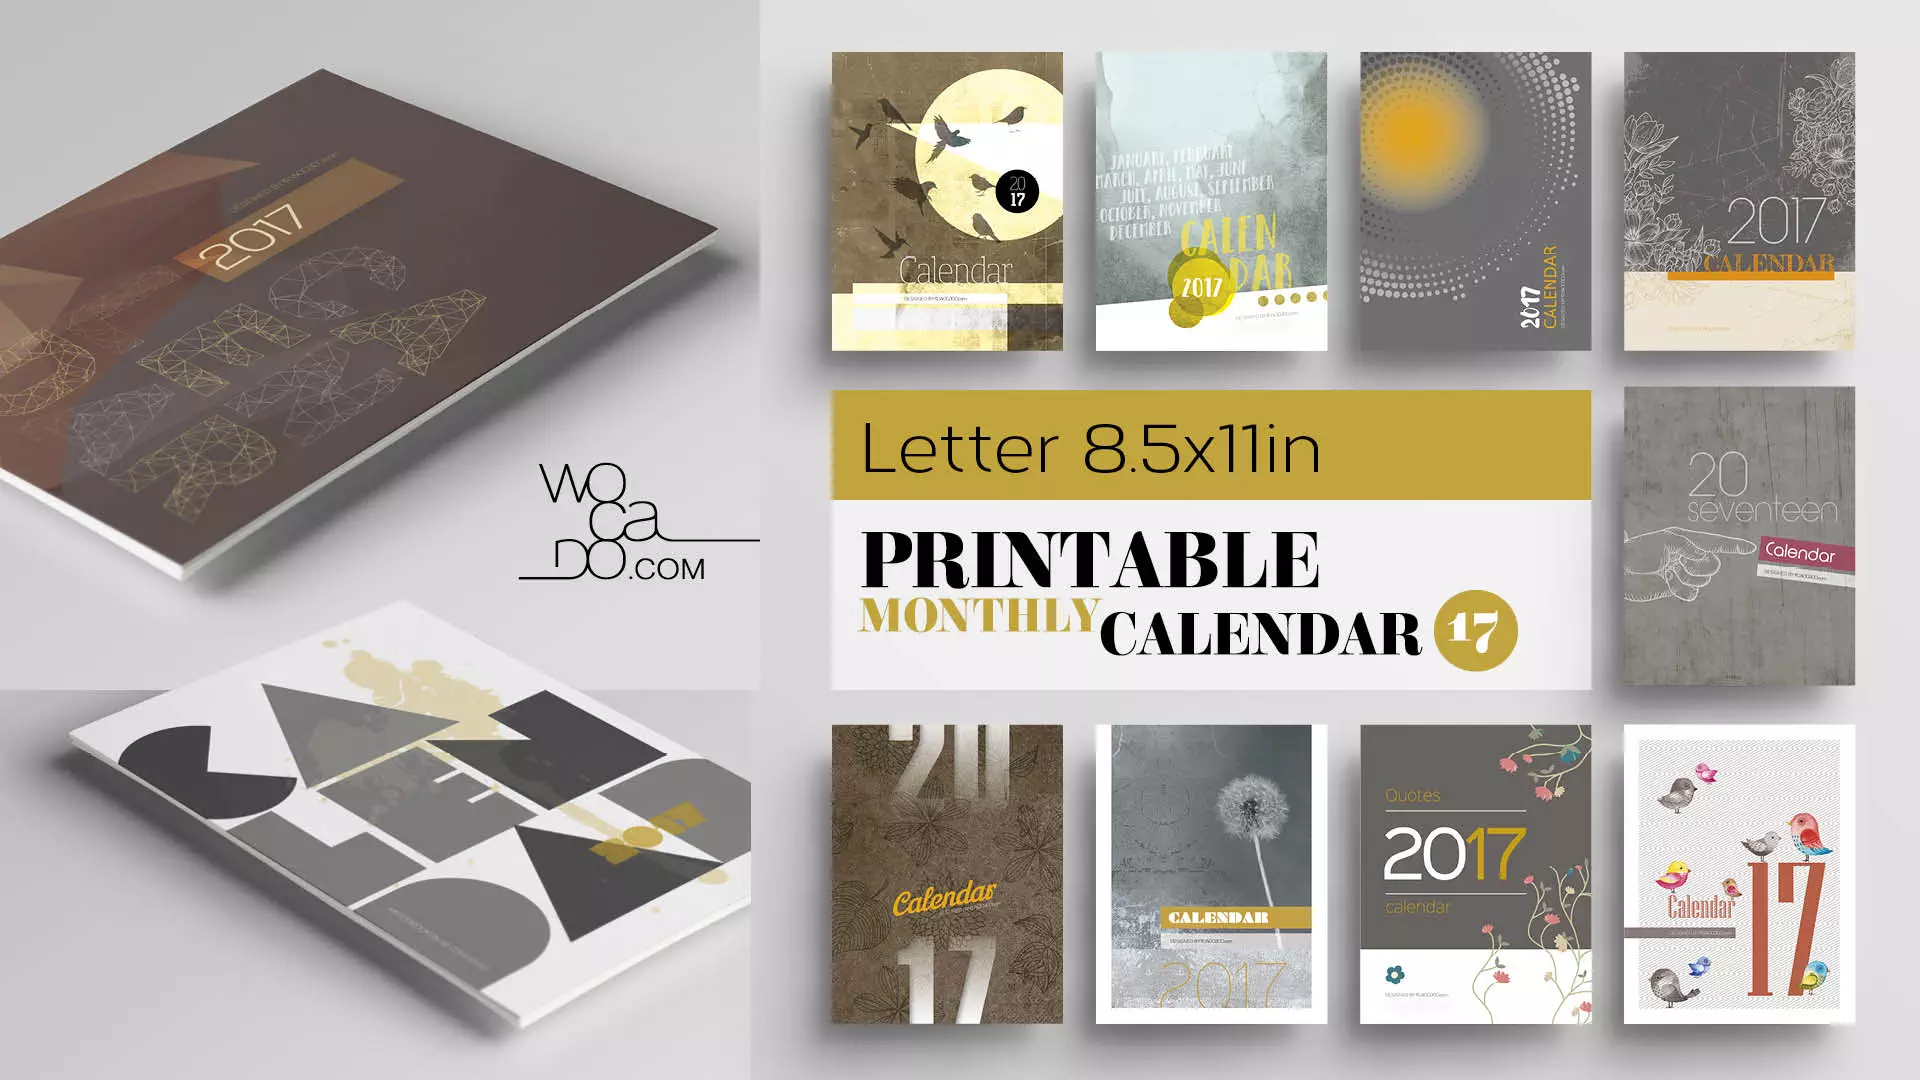 Printable Calendars 2017 by WOCADO